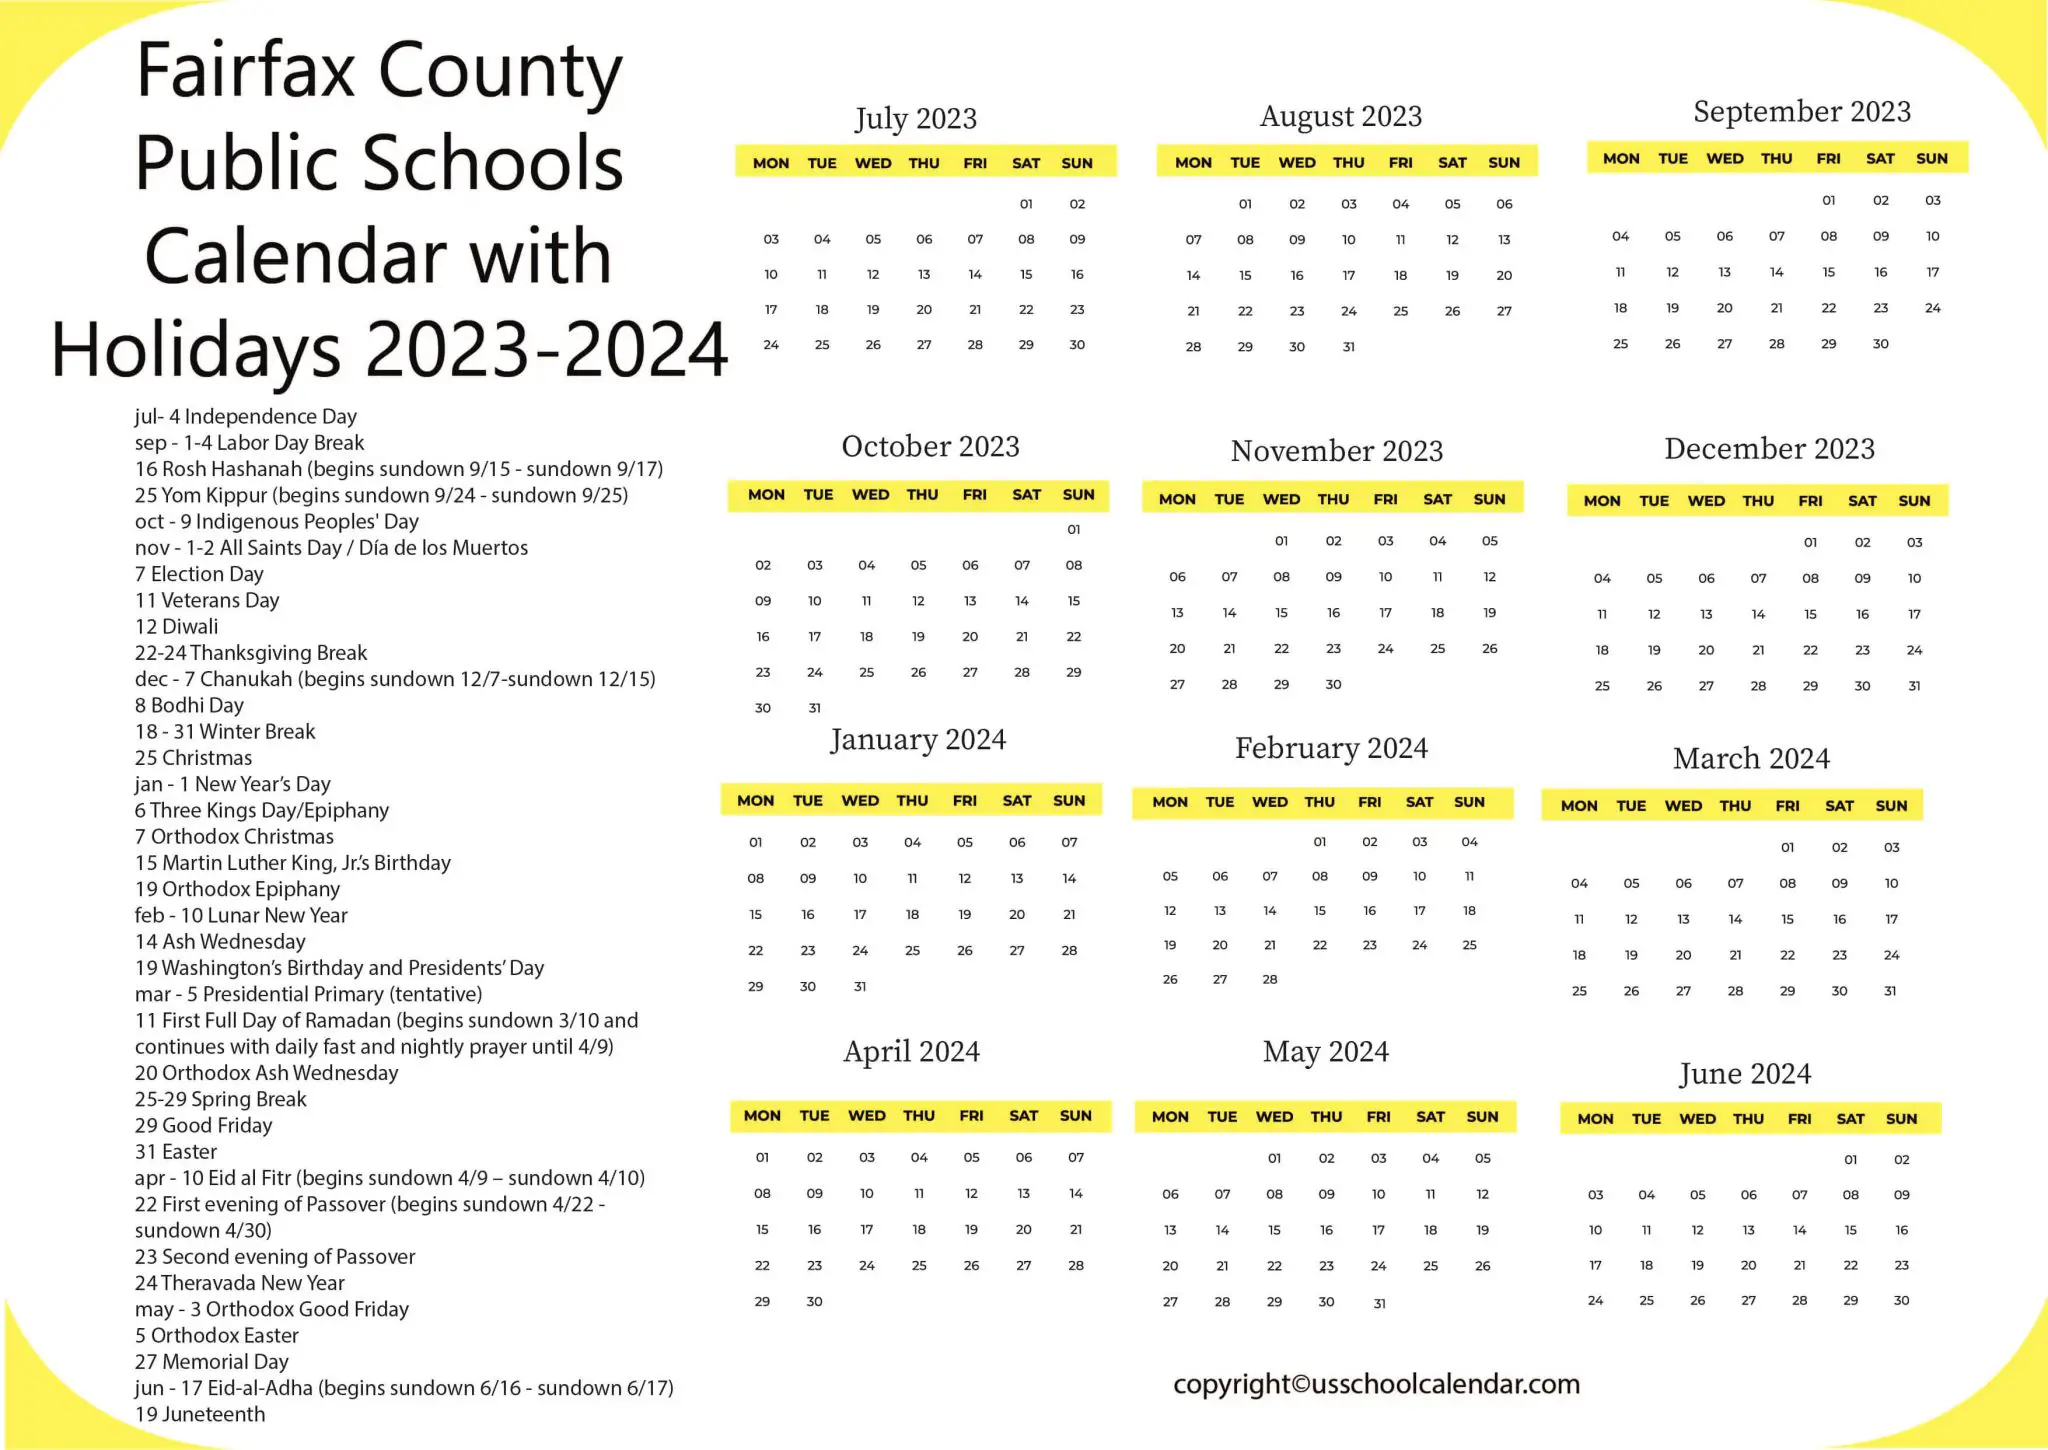 Fairfax County Public Schools Calendar 2025